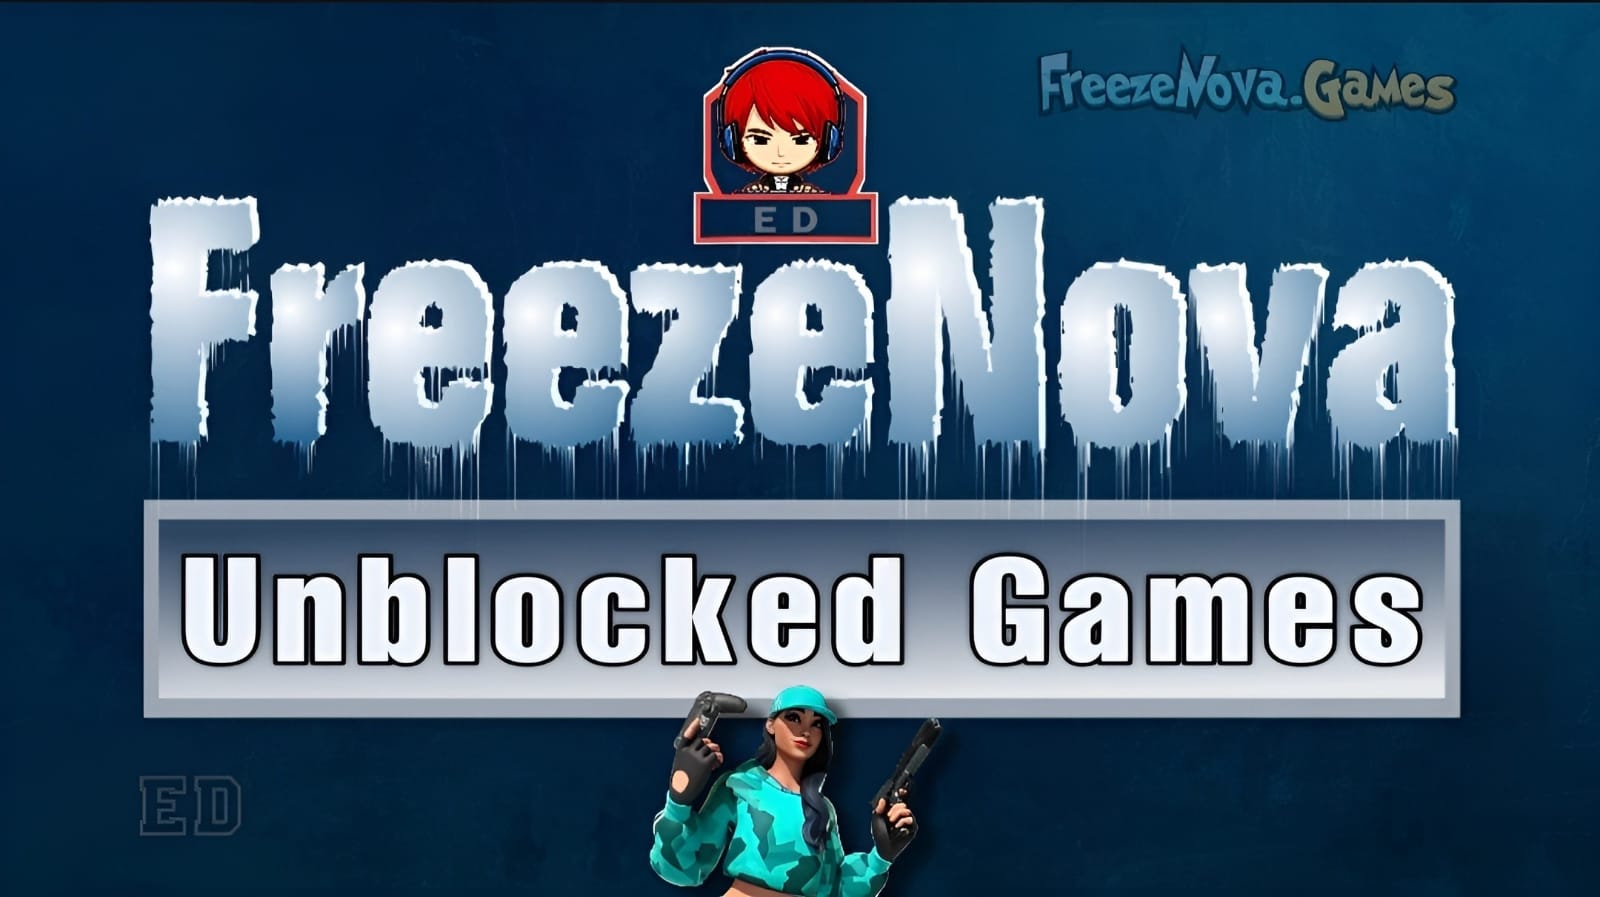 Check out FreezeNova Games! 👇🎮👾 #gamermemes #Unblockedgames